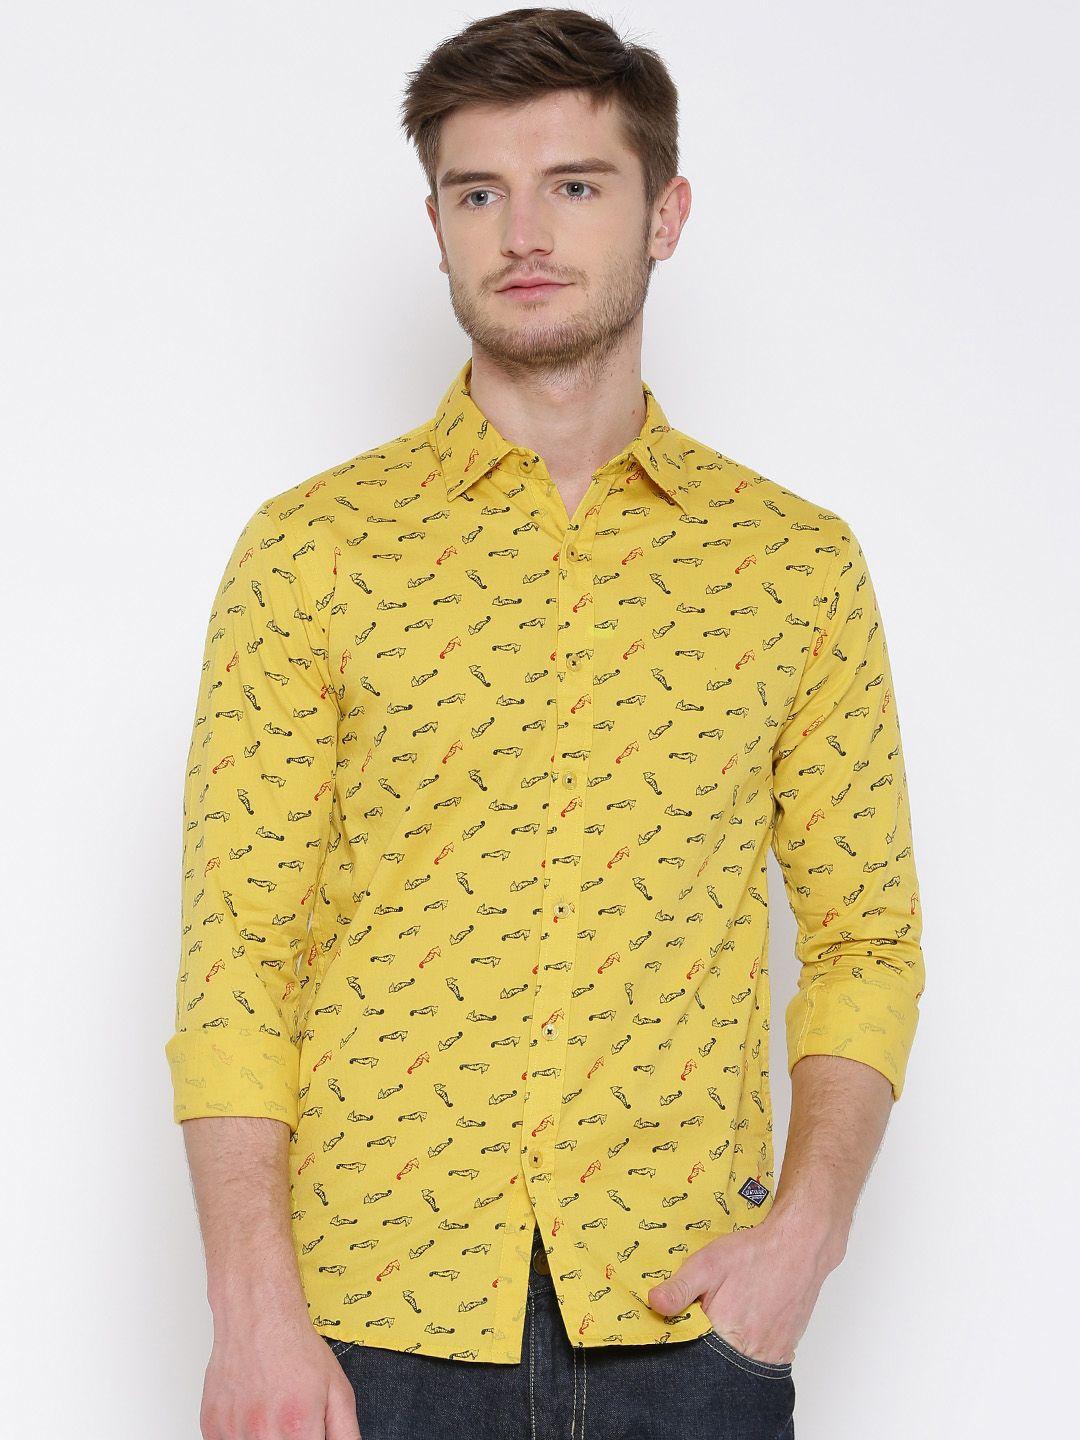 status quo yellow printed slim casual shirt